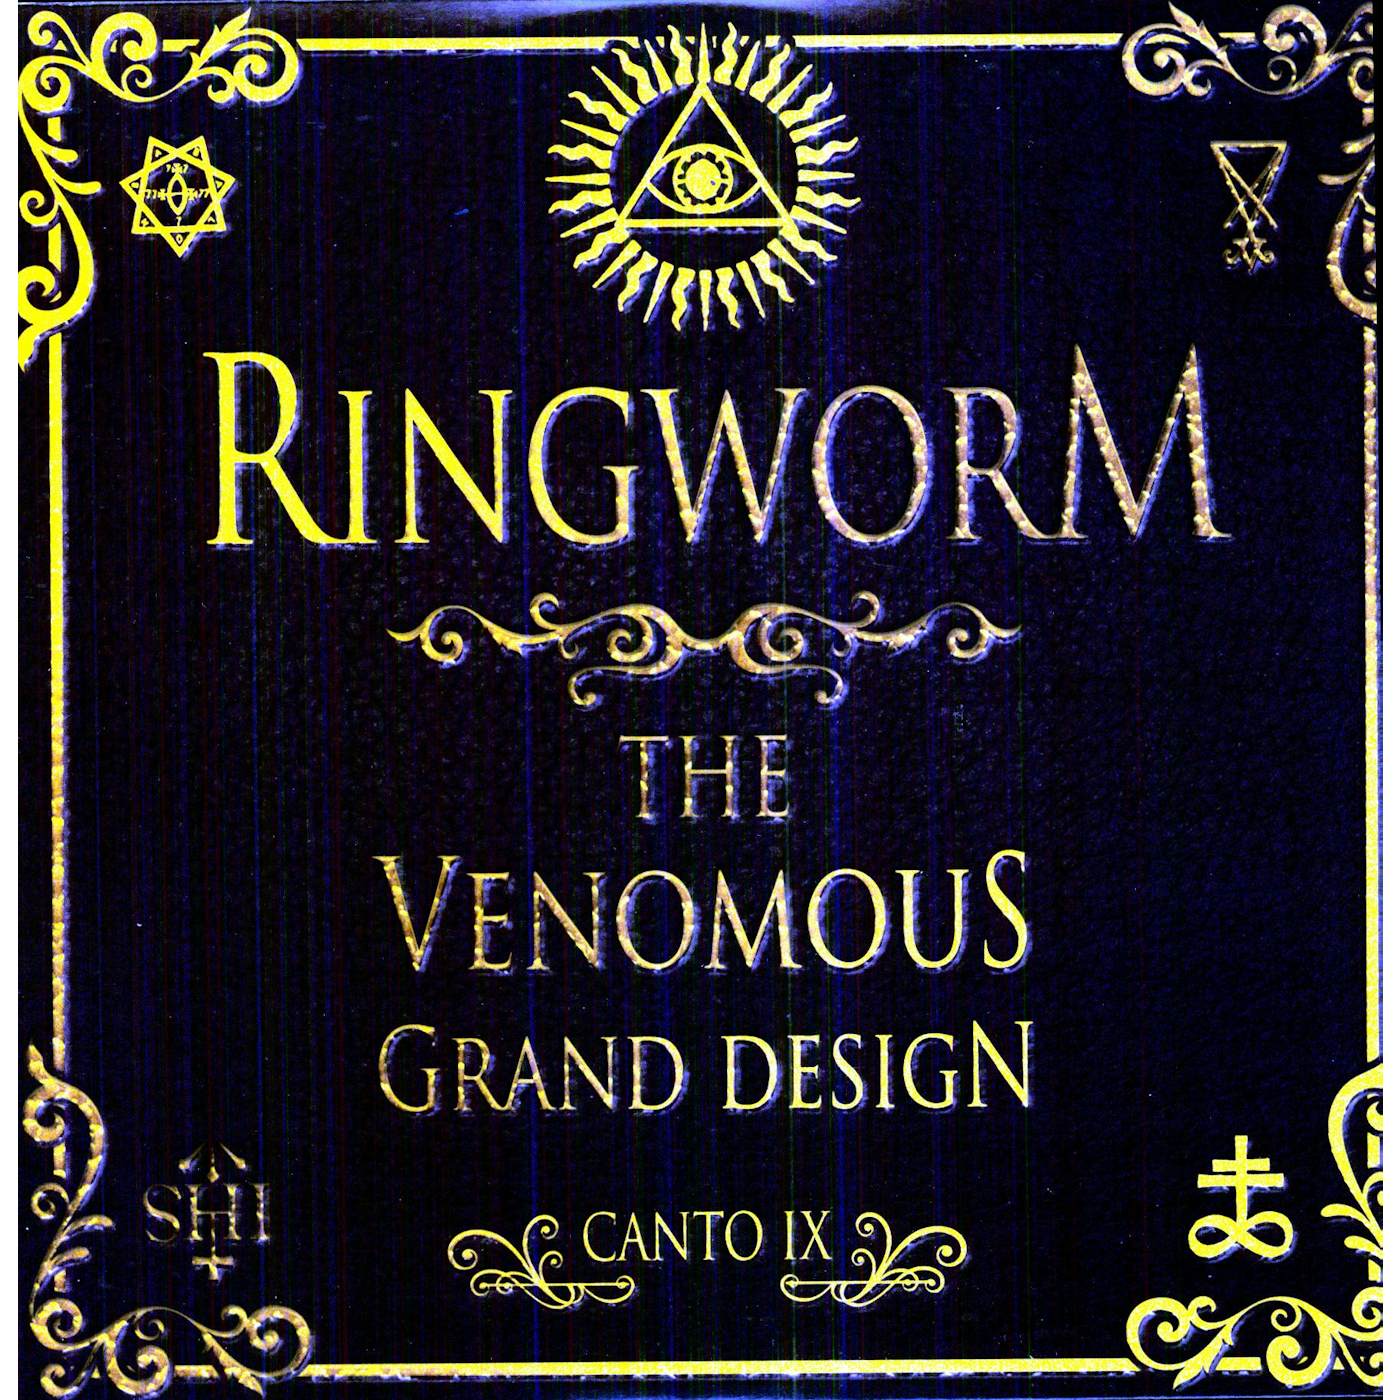 Ringworm VENOMOUS GRAND DESIGN Vinyl Record